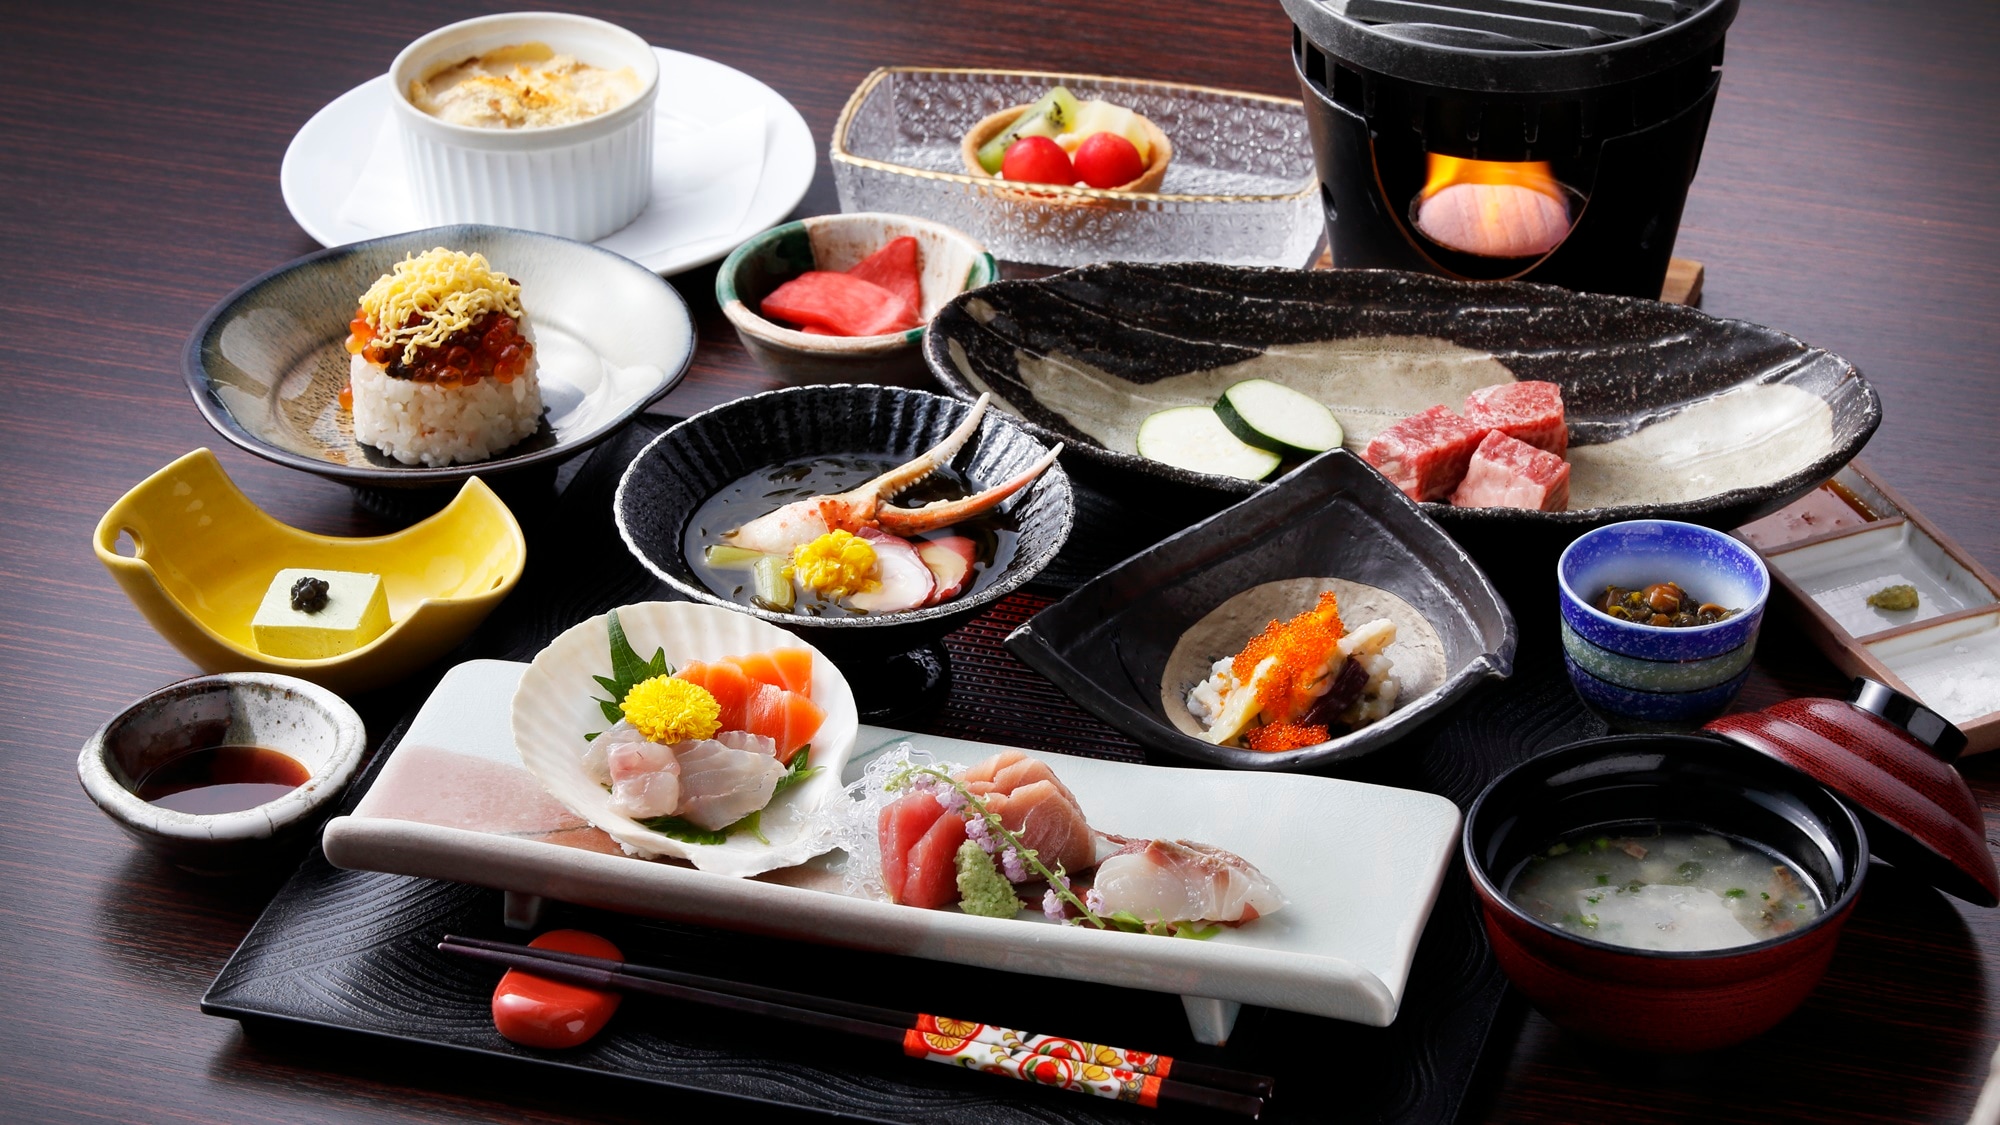 [Dinner example] Enjoy a creative kaiseki meal using carefully selected seasonal ingredients from Aomori.